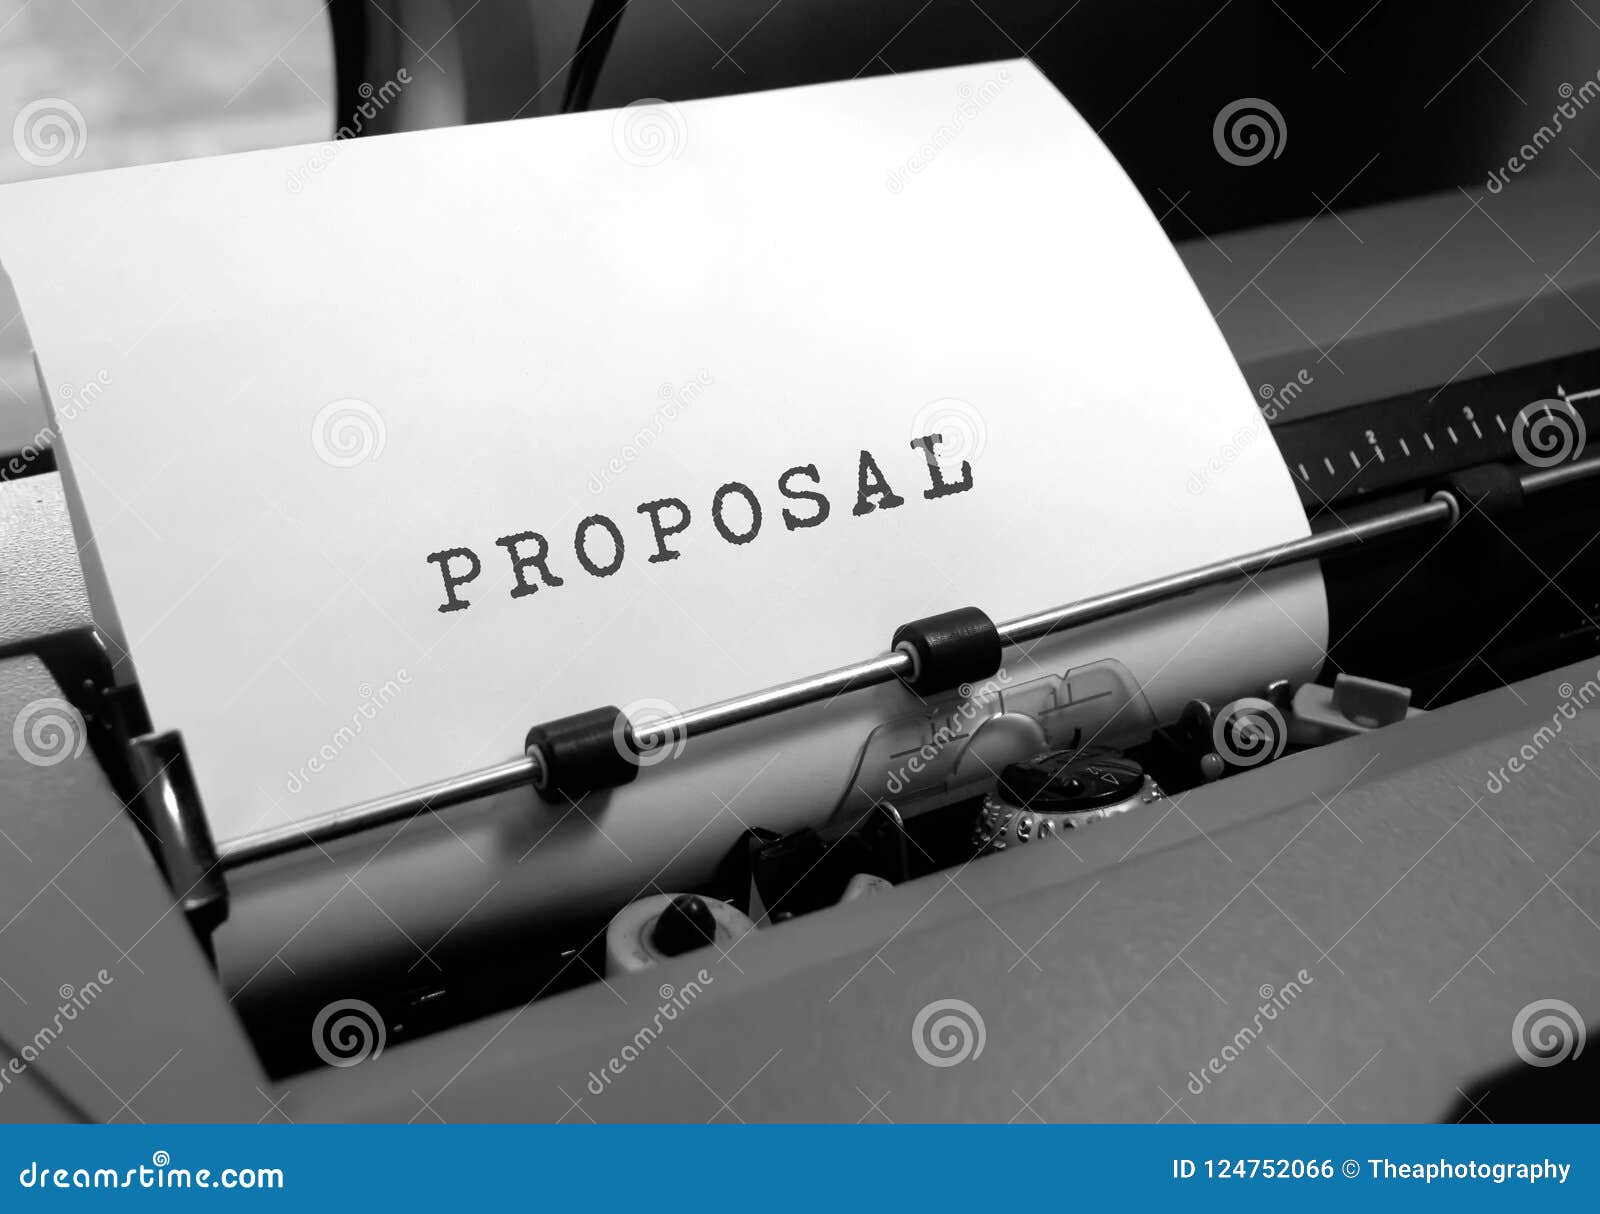 proposal written on white paper.